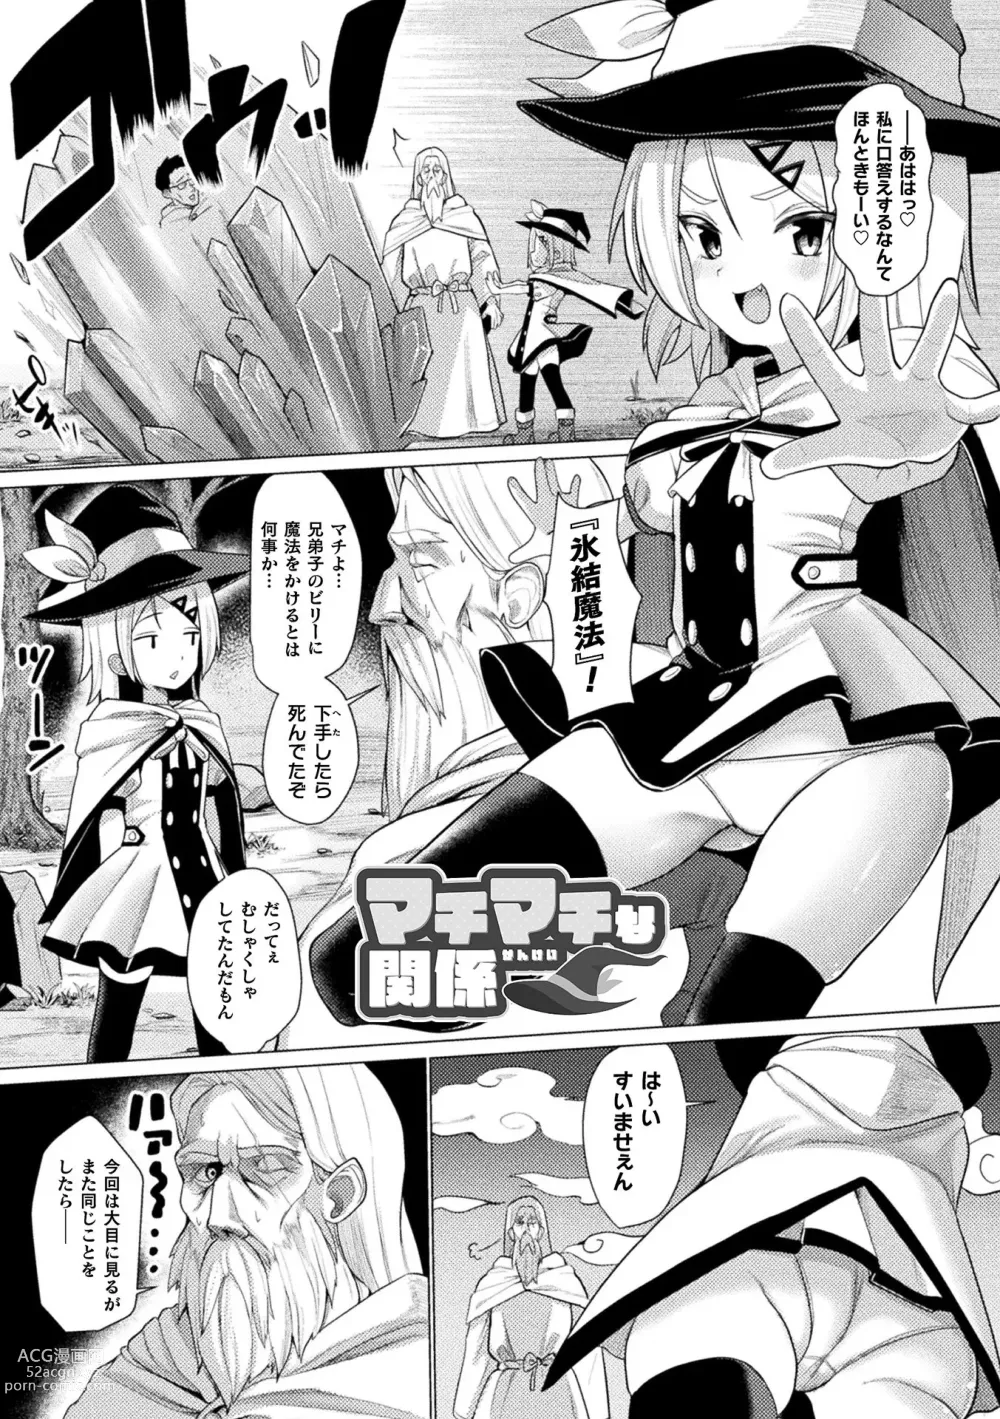 Page 147 of manga Mesugaki mitchiri ecchi